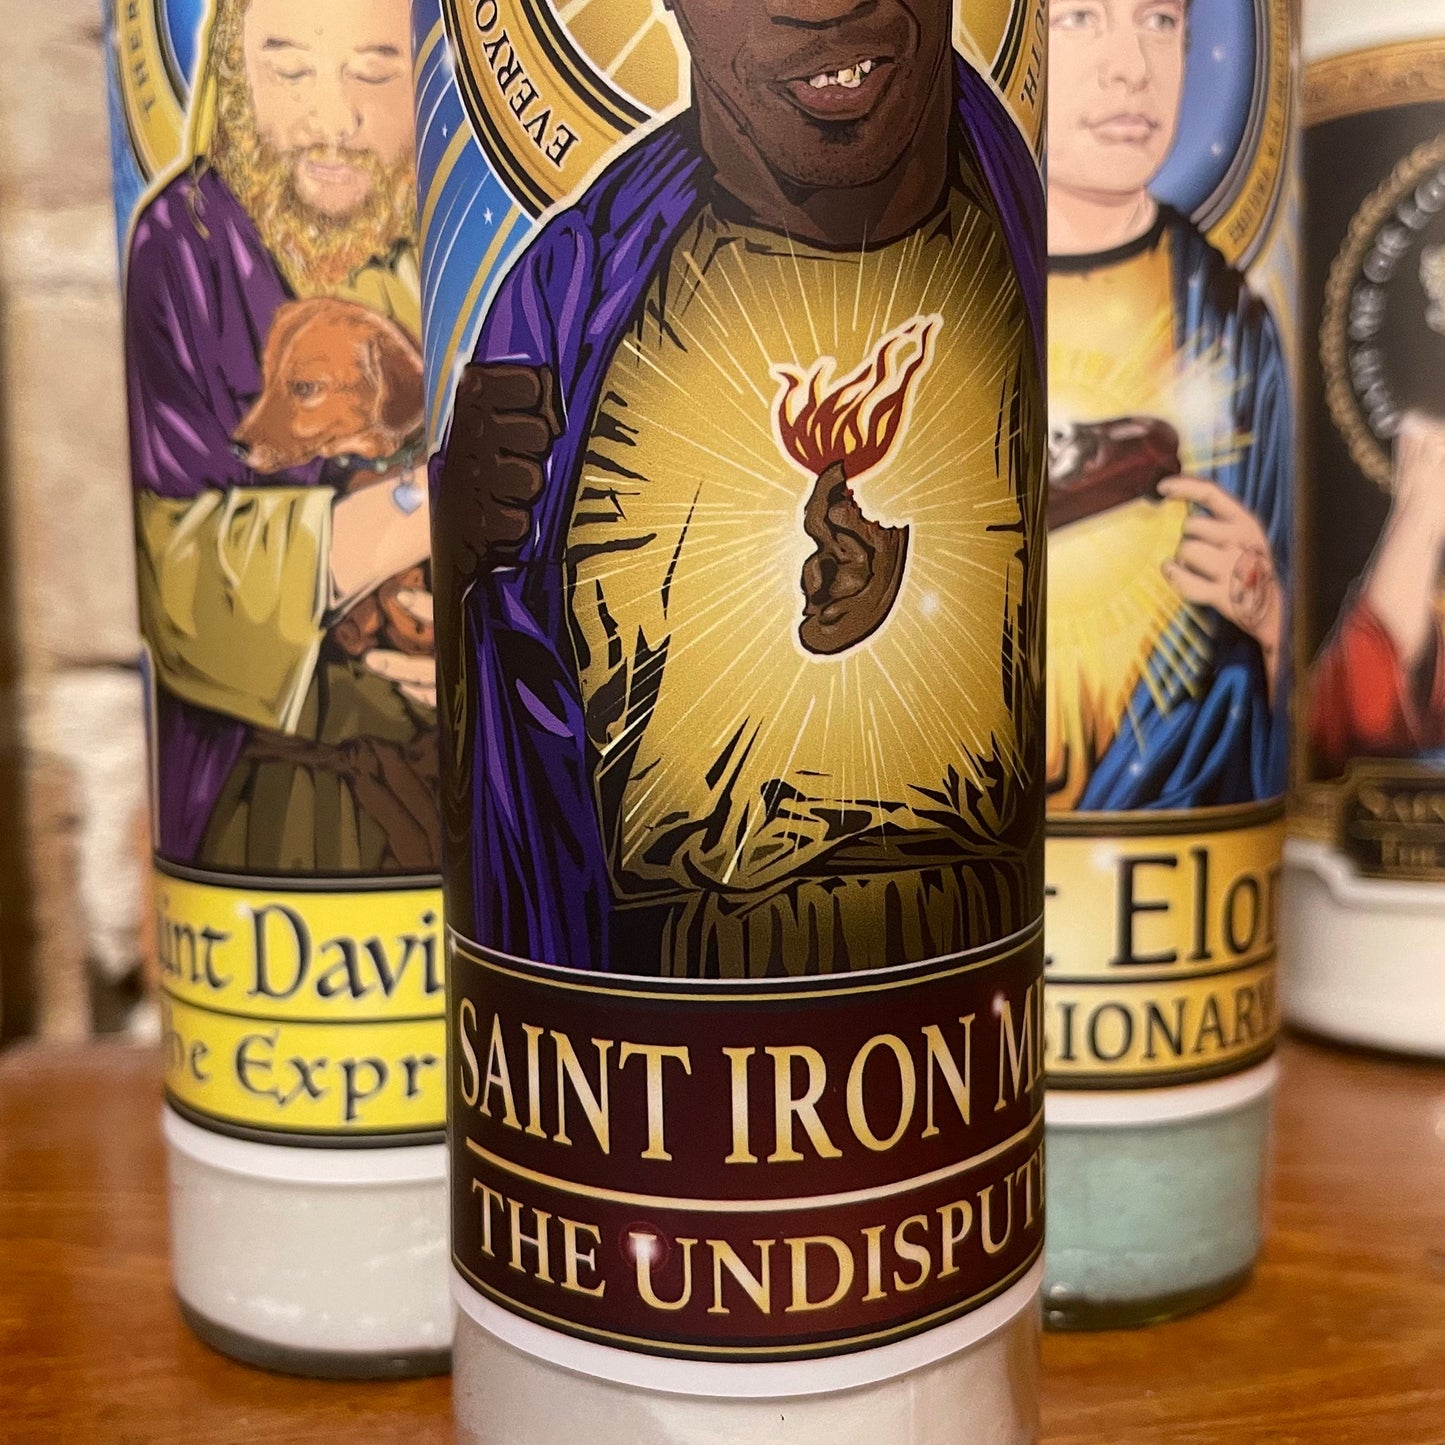 Saint Iron Mike The Undisputed Candle Cleaverandblade.com